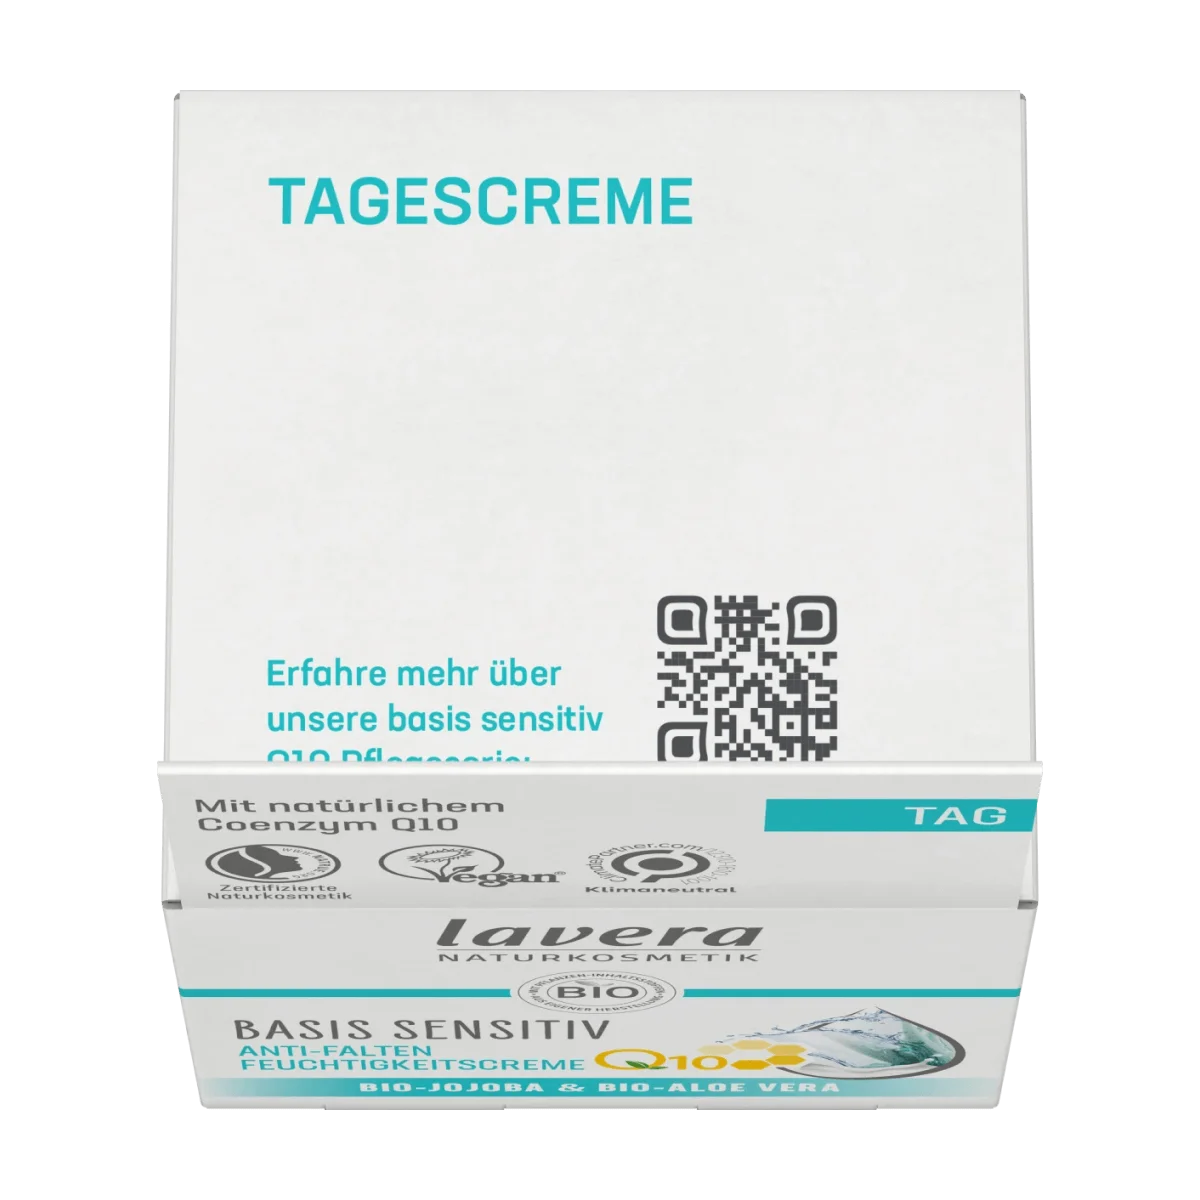 lavera Anti Falten Gesichtscreme Q10 Basis Sensitiv, 50 ml